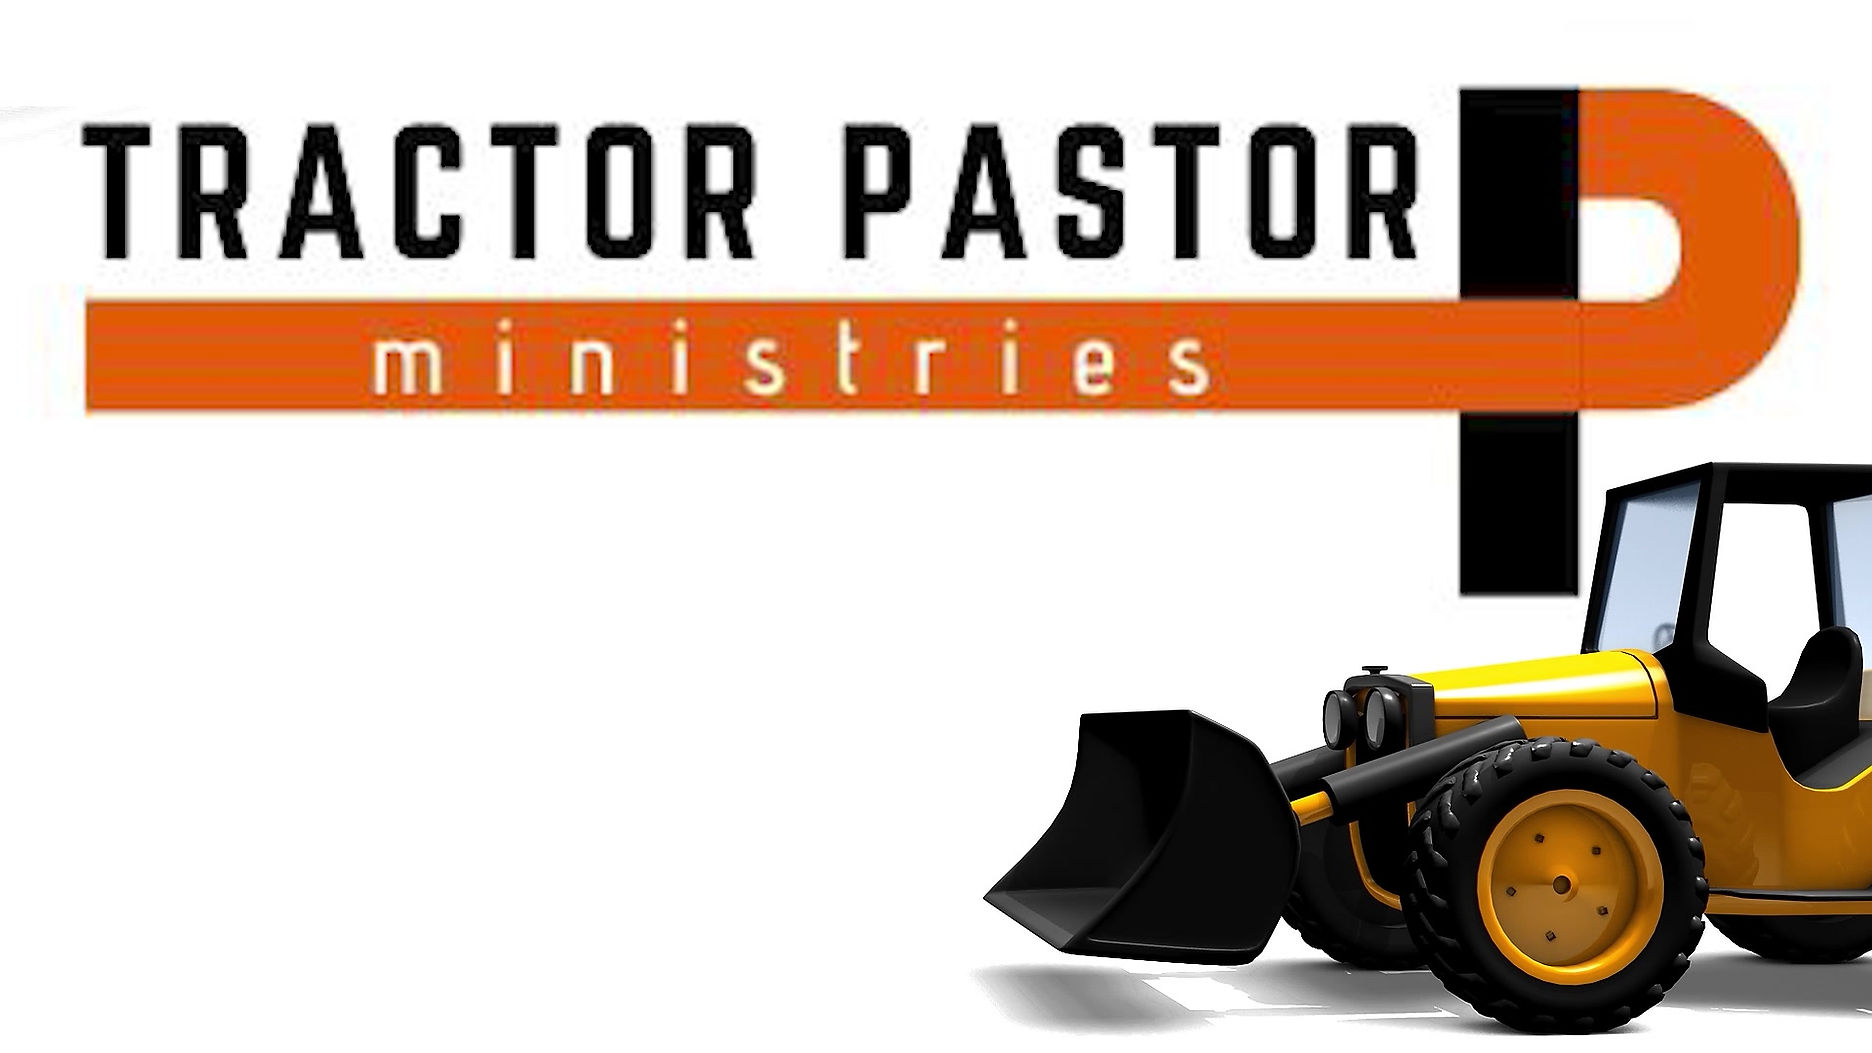 Tractor pastor logo no sound